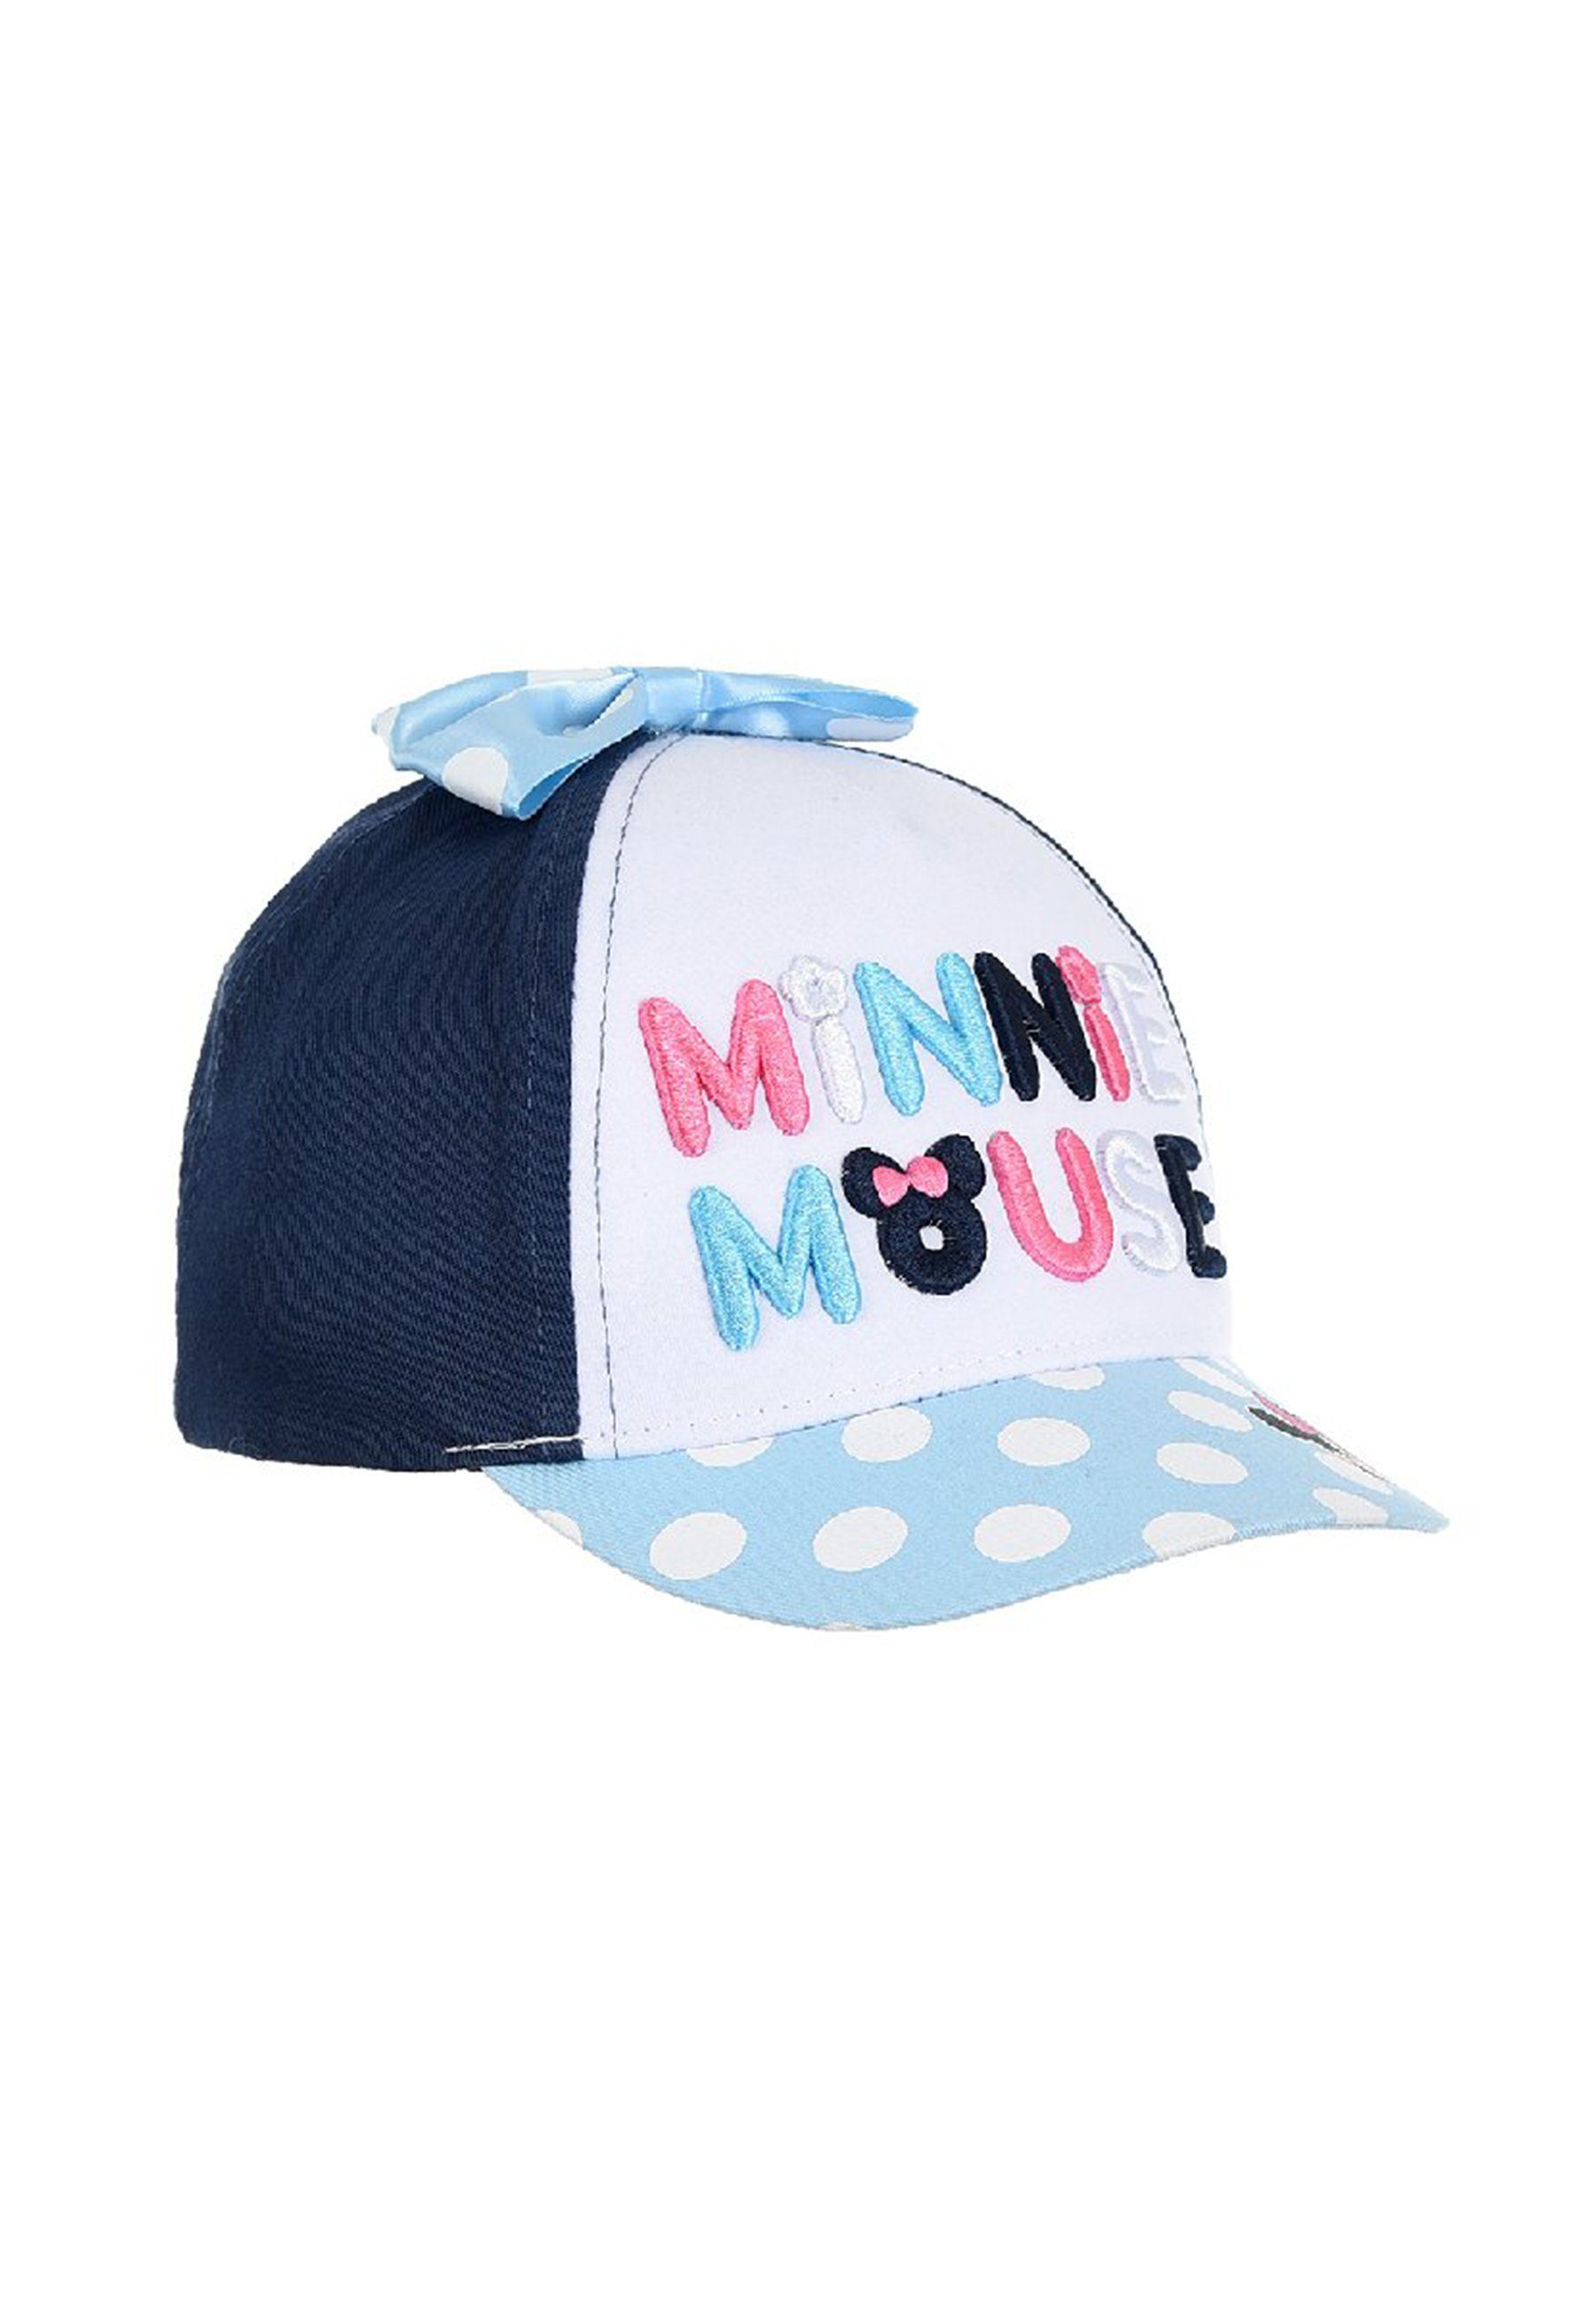 Disney Minnie Mouse Baseball Cap Schirmmütze Dunkel-Blau Mütze Baby Kappe Cap Mädchen